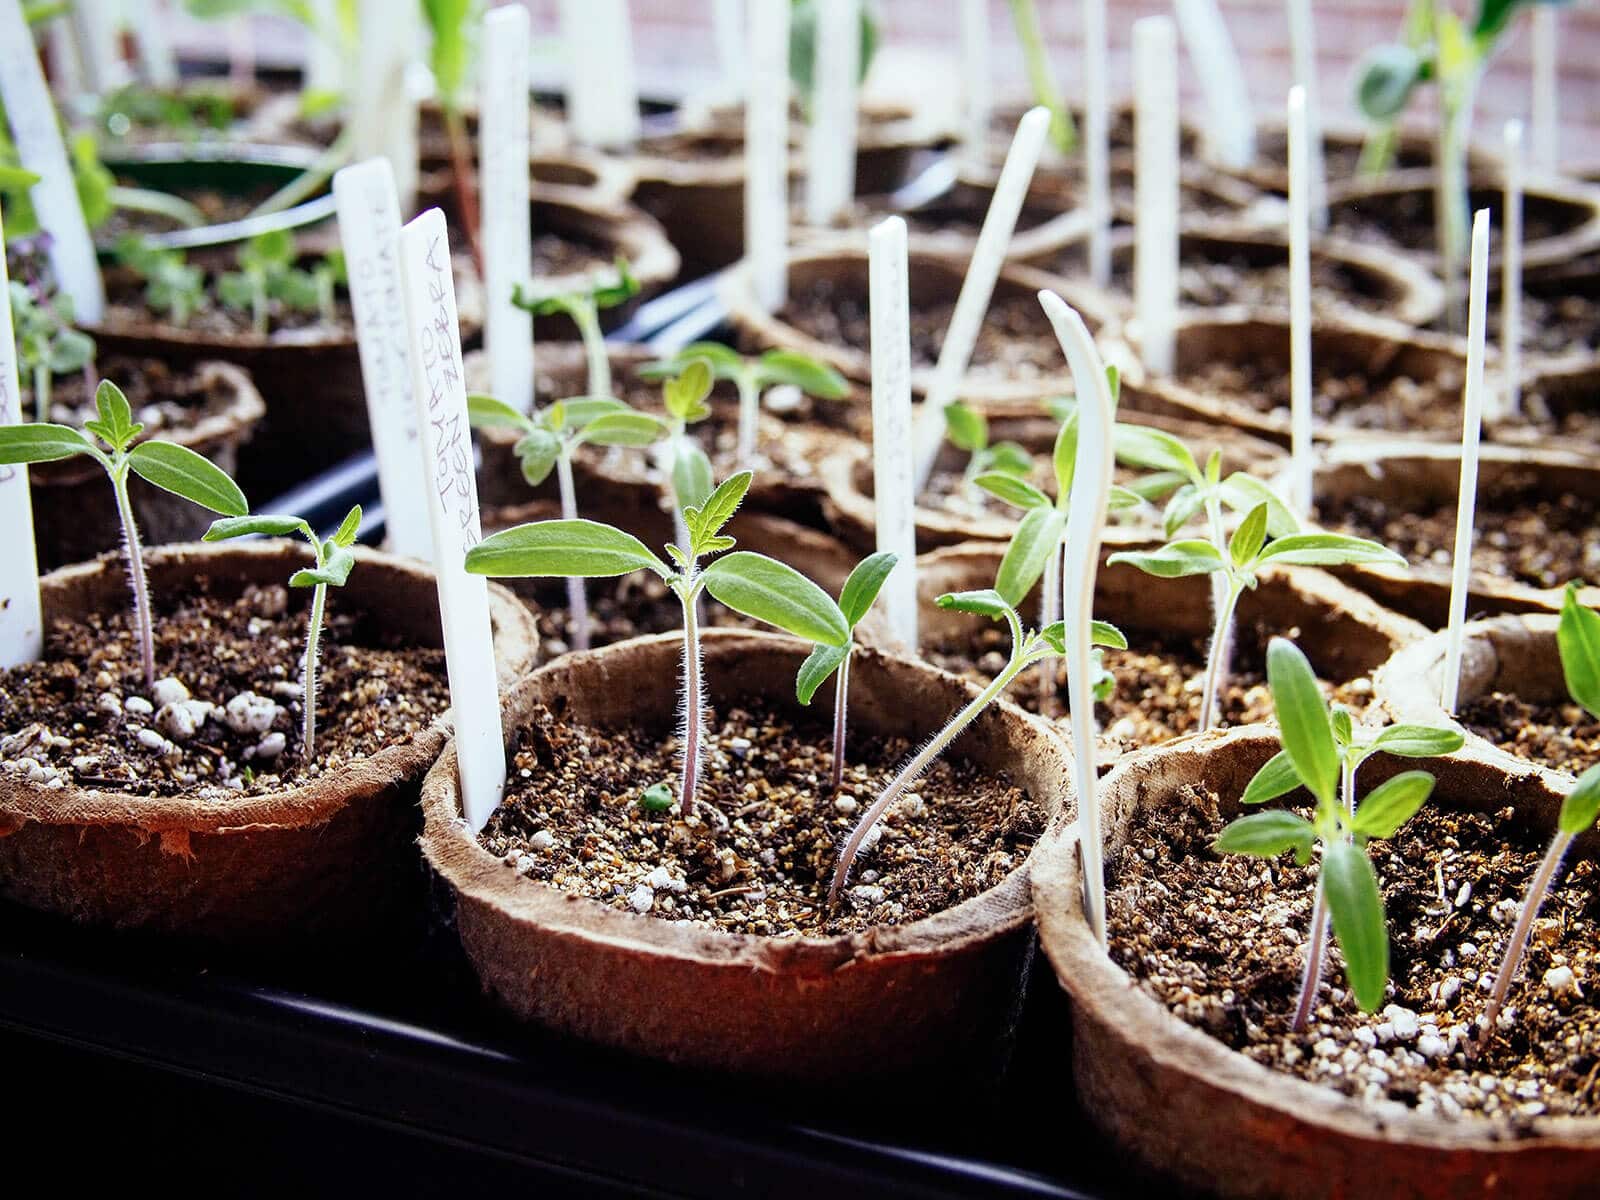 New tomato seedings with cotyledons